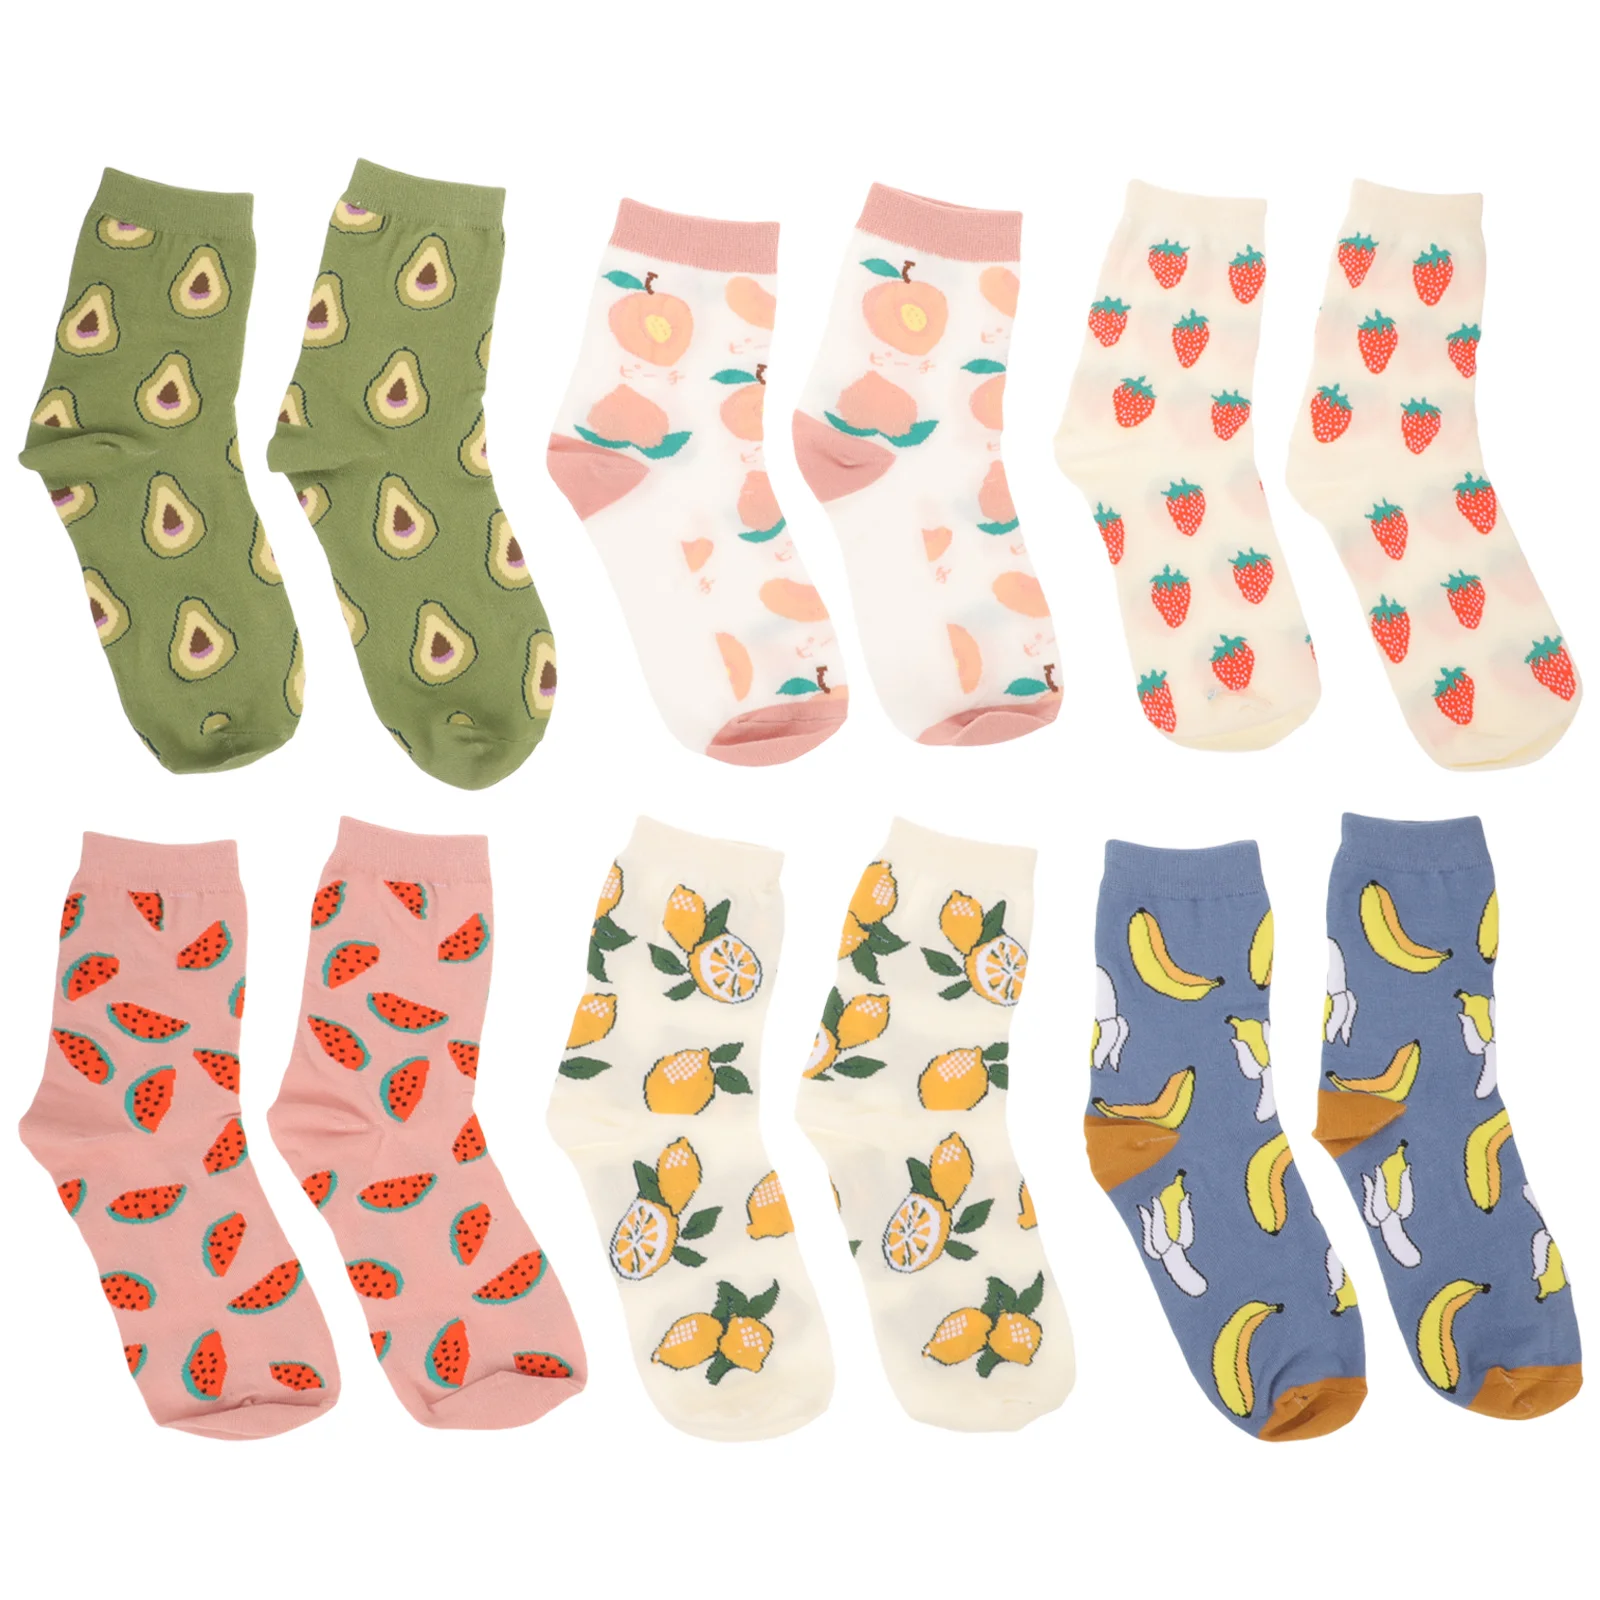 

6 Pairs Fruit Socks Girl Mid-calf Length Pattern Stockings Adorable Cotton Women's